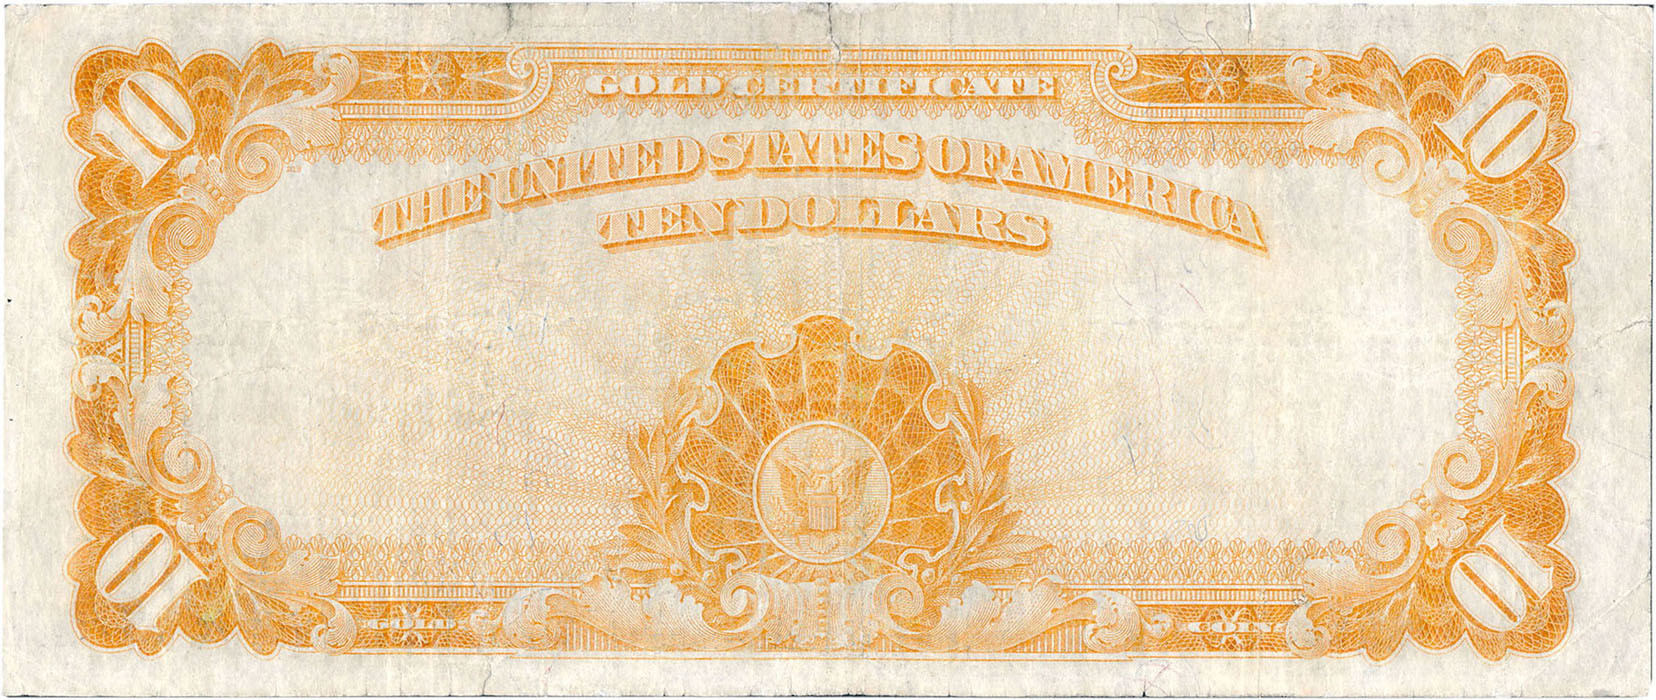 USA. 10 dolarów 1922 Gold certyficate, Large size, seria K